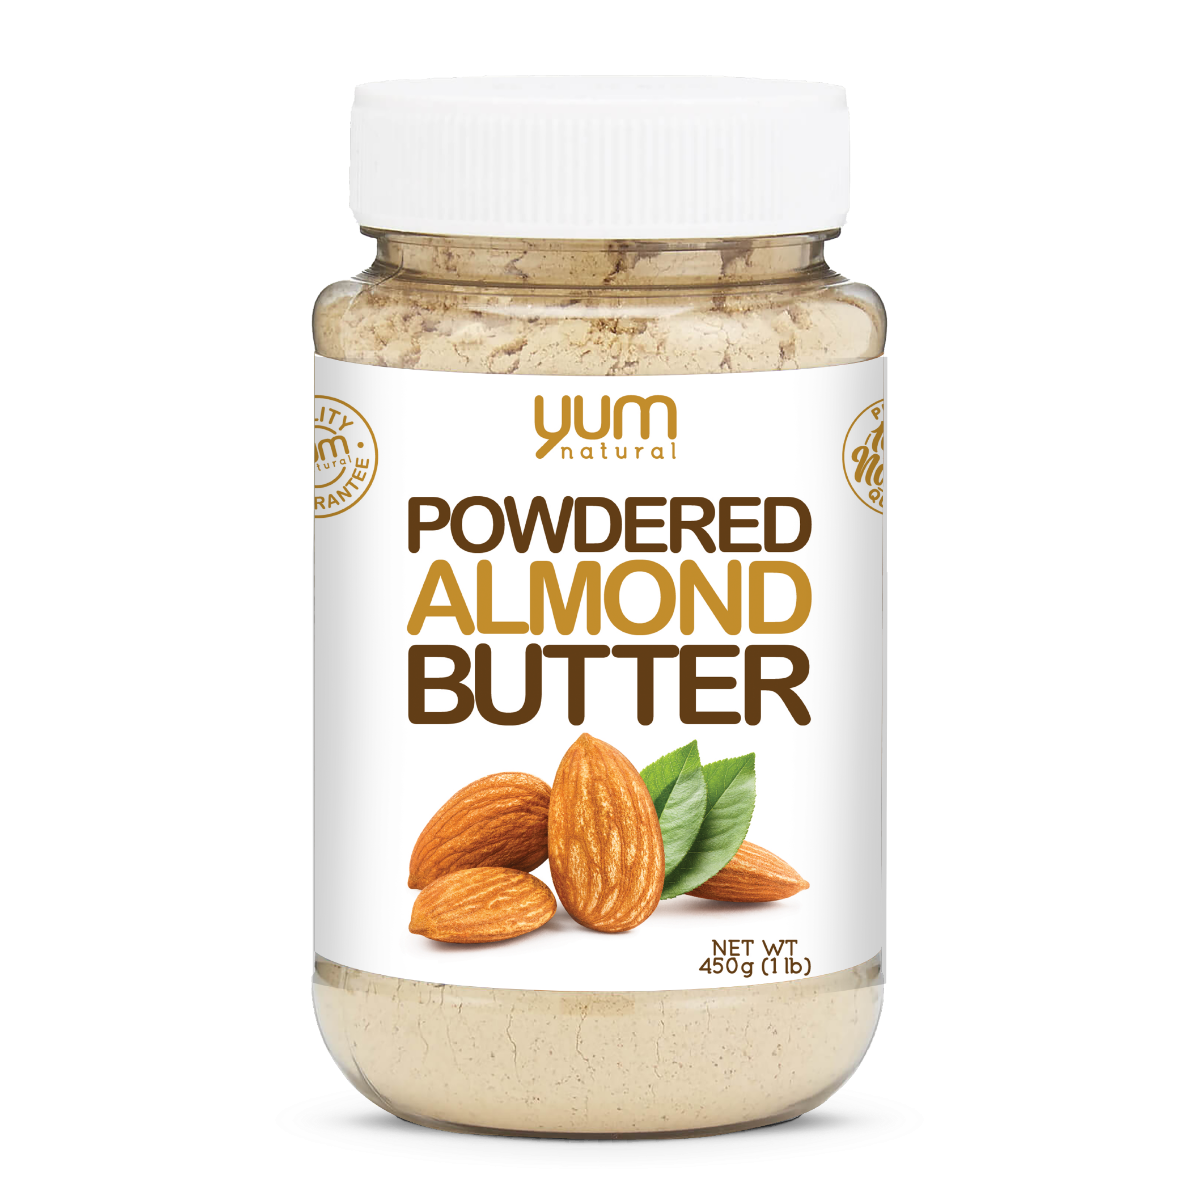 Yum Powdered Almond Butter